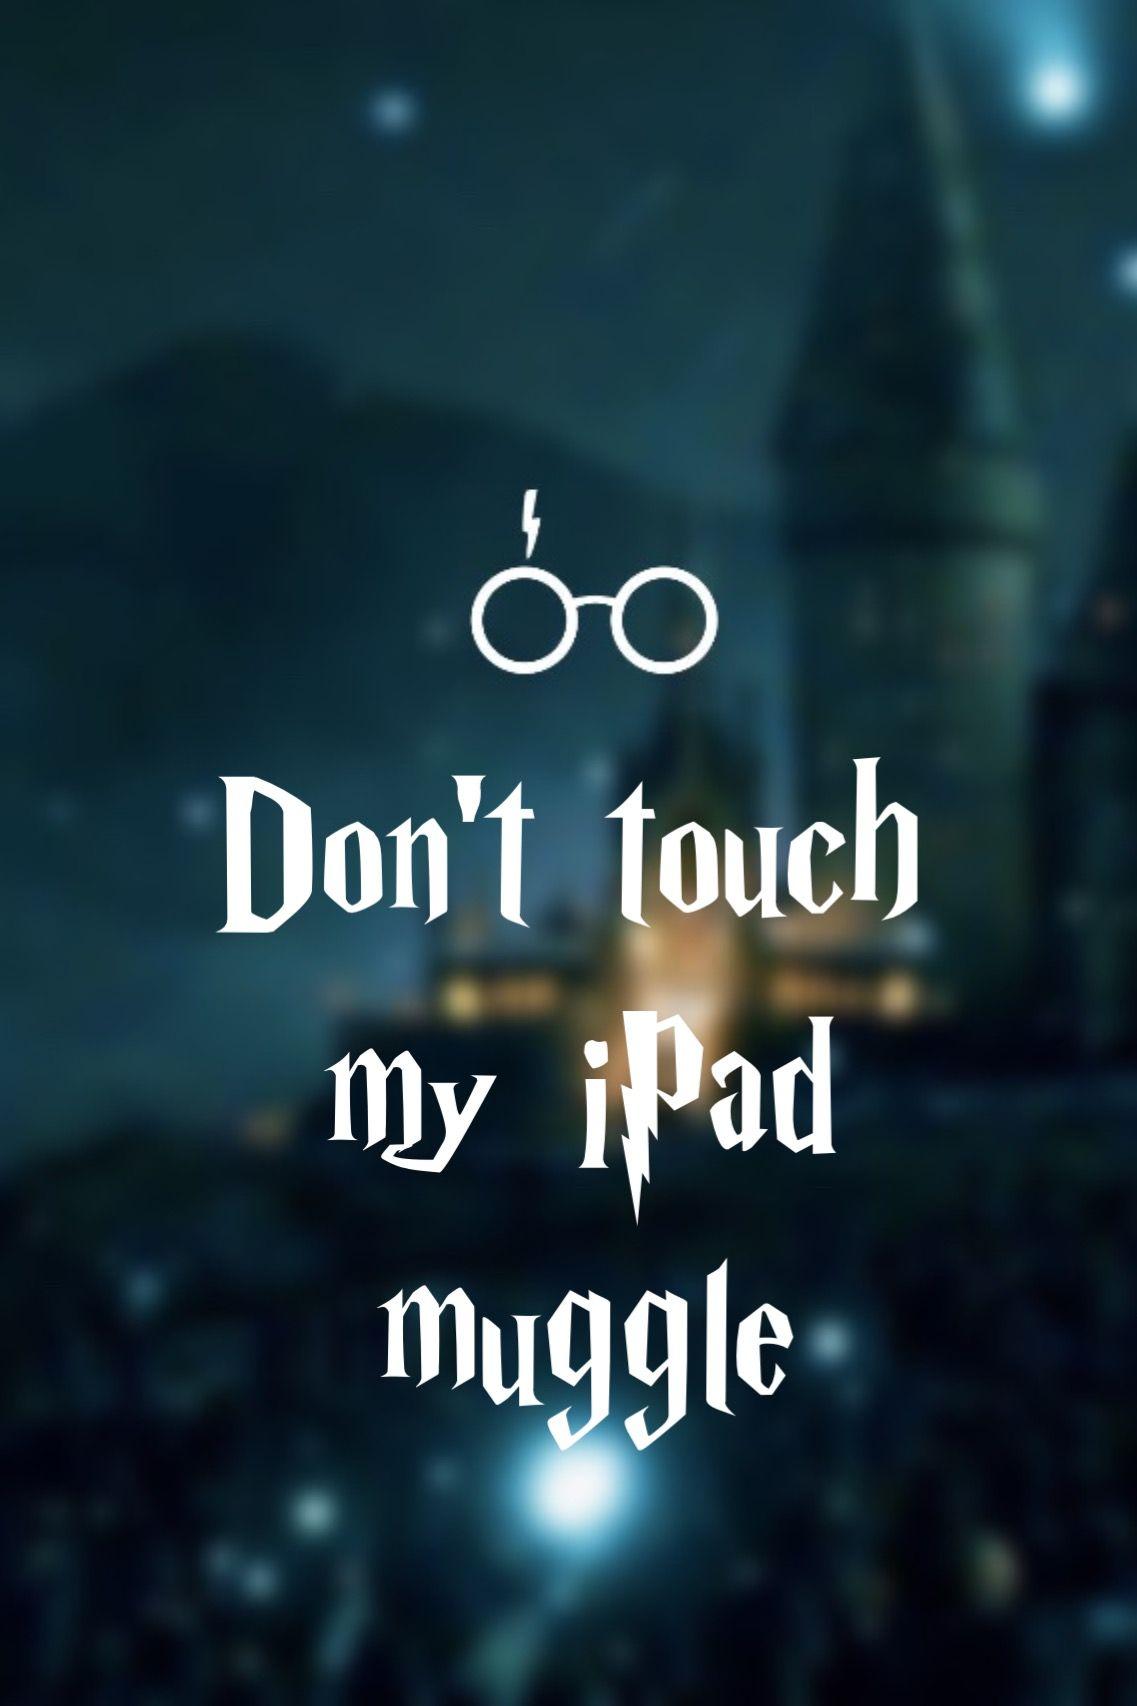 Don't touch my iPad muggle WALLPAPER #HarryPotter. Random ♡